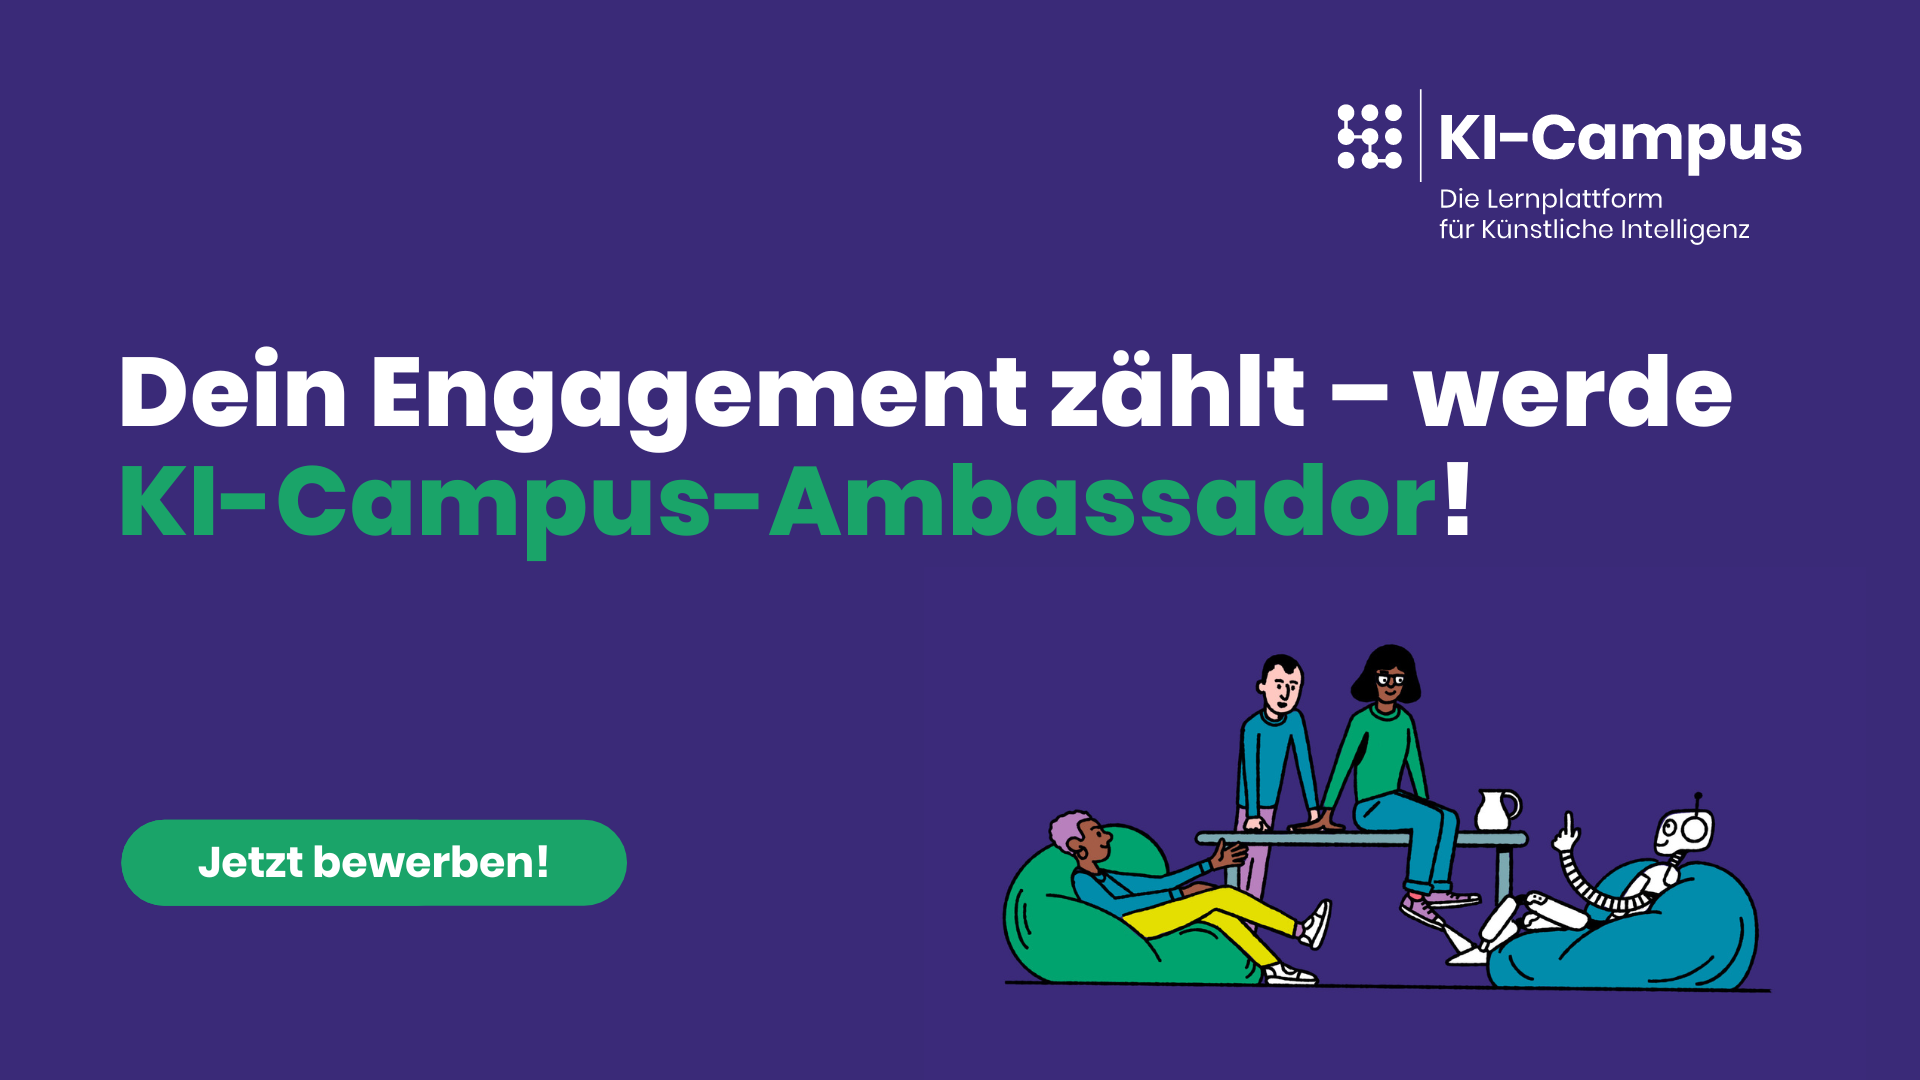 KI-Campus-Ambassador